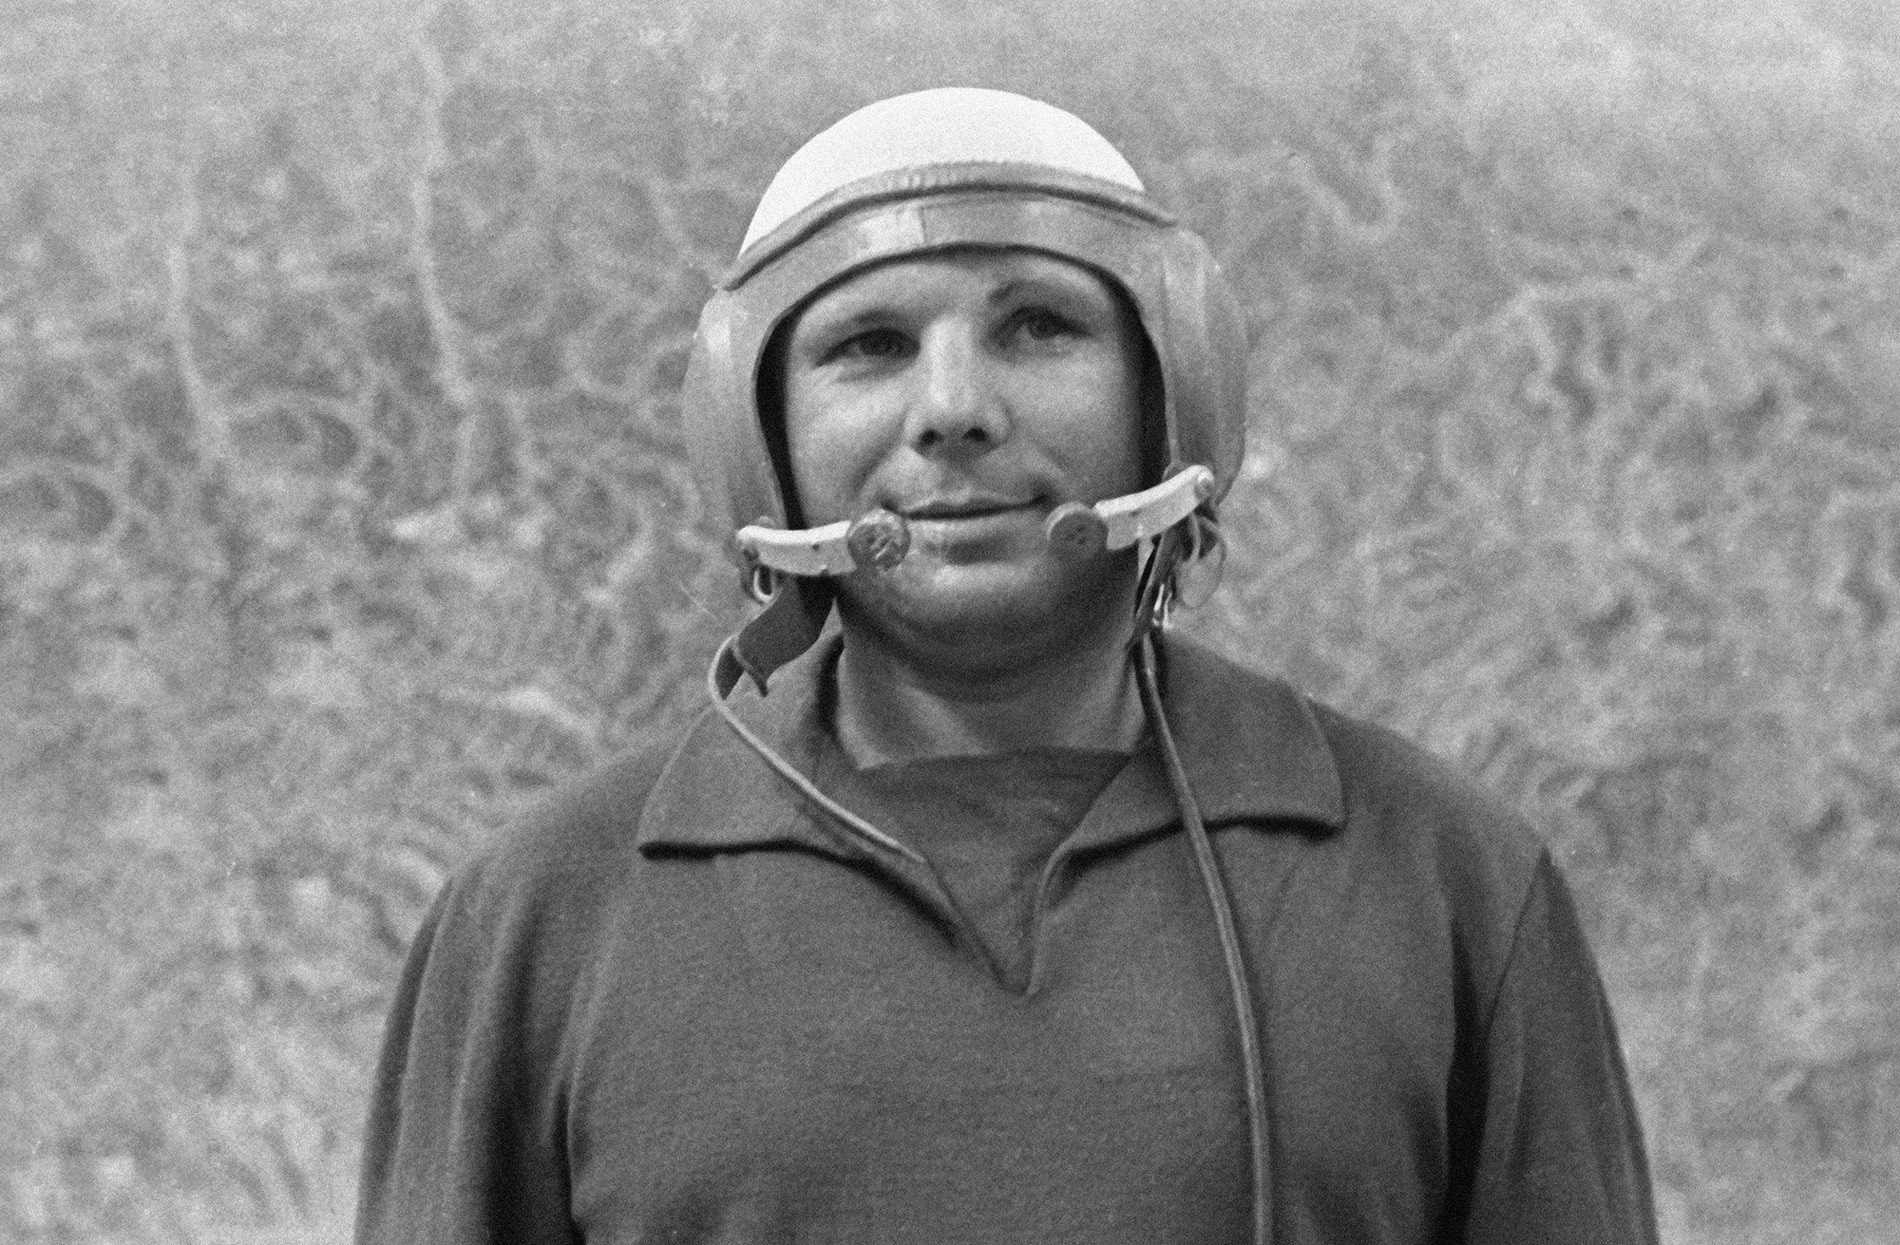 Pilot i kozmonaut Jurij Gagarin, 1. lipnja 1962.

